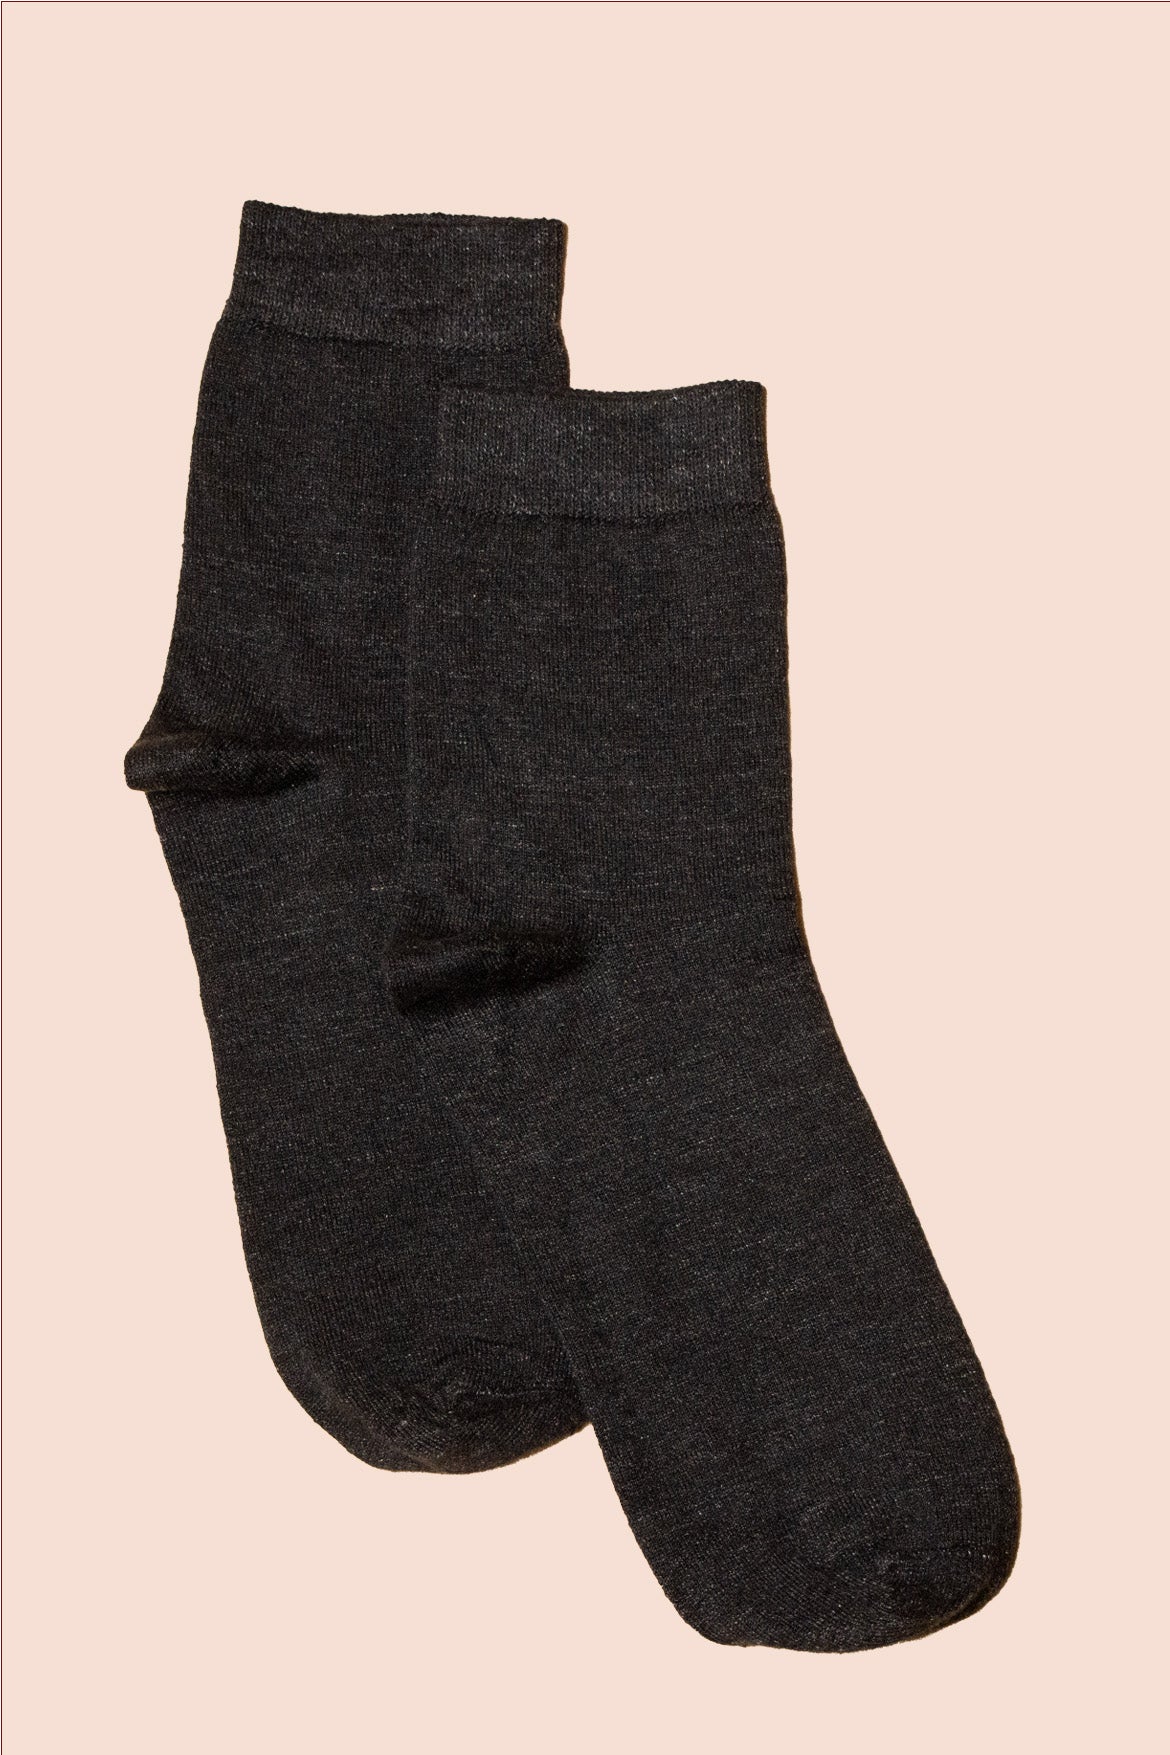 Petrone-chaussettes-lin-coton-homme-posee-noir